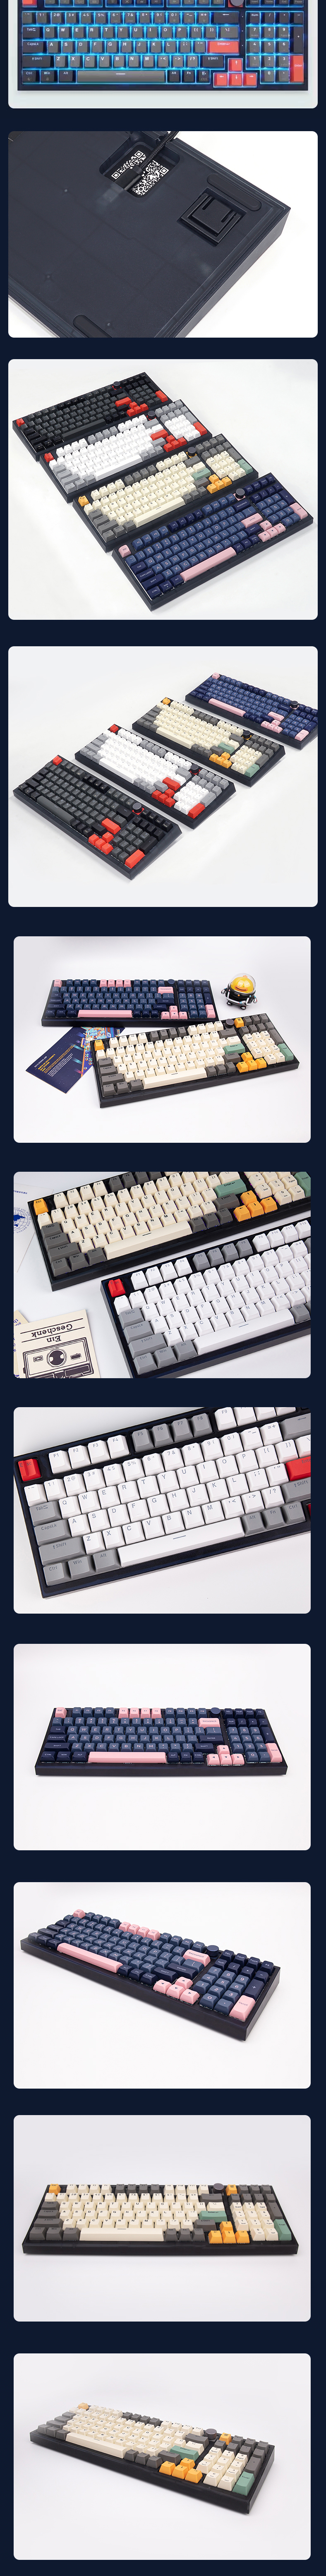 Skyloong GK980+ Wired Mechanical Keyboard